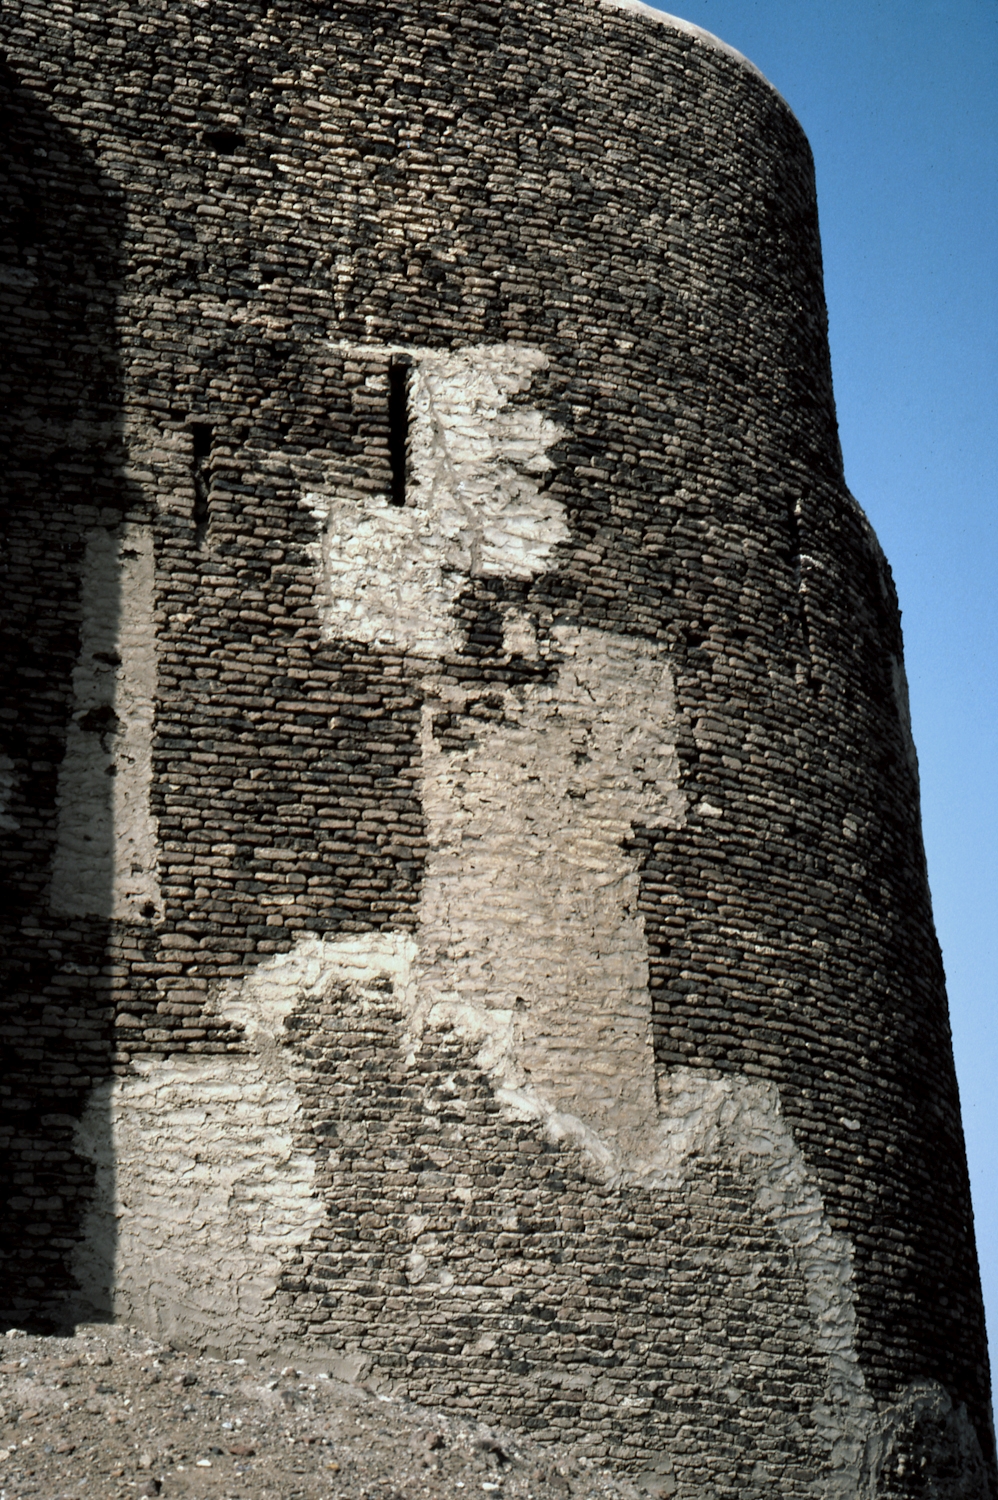 Zabid. Zabid. View of brick walls of historic fortress city.